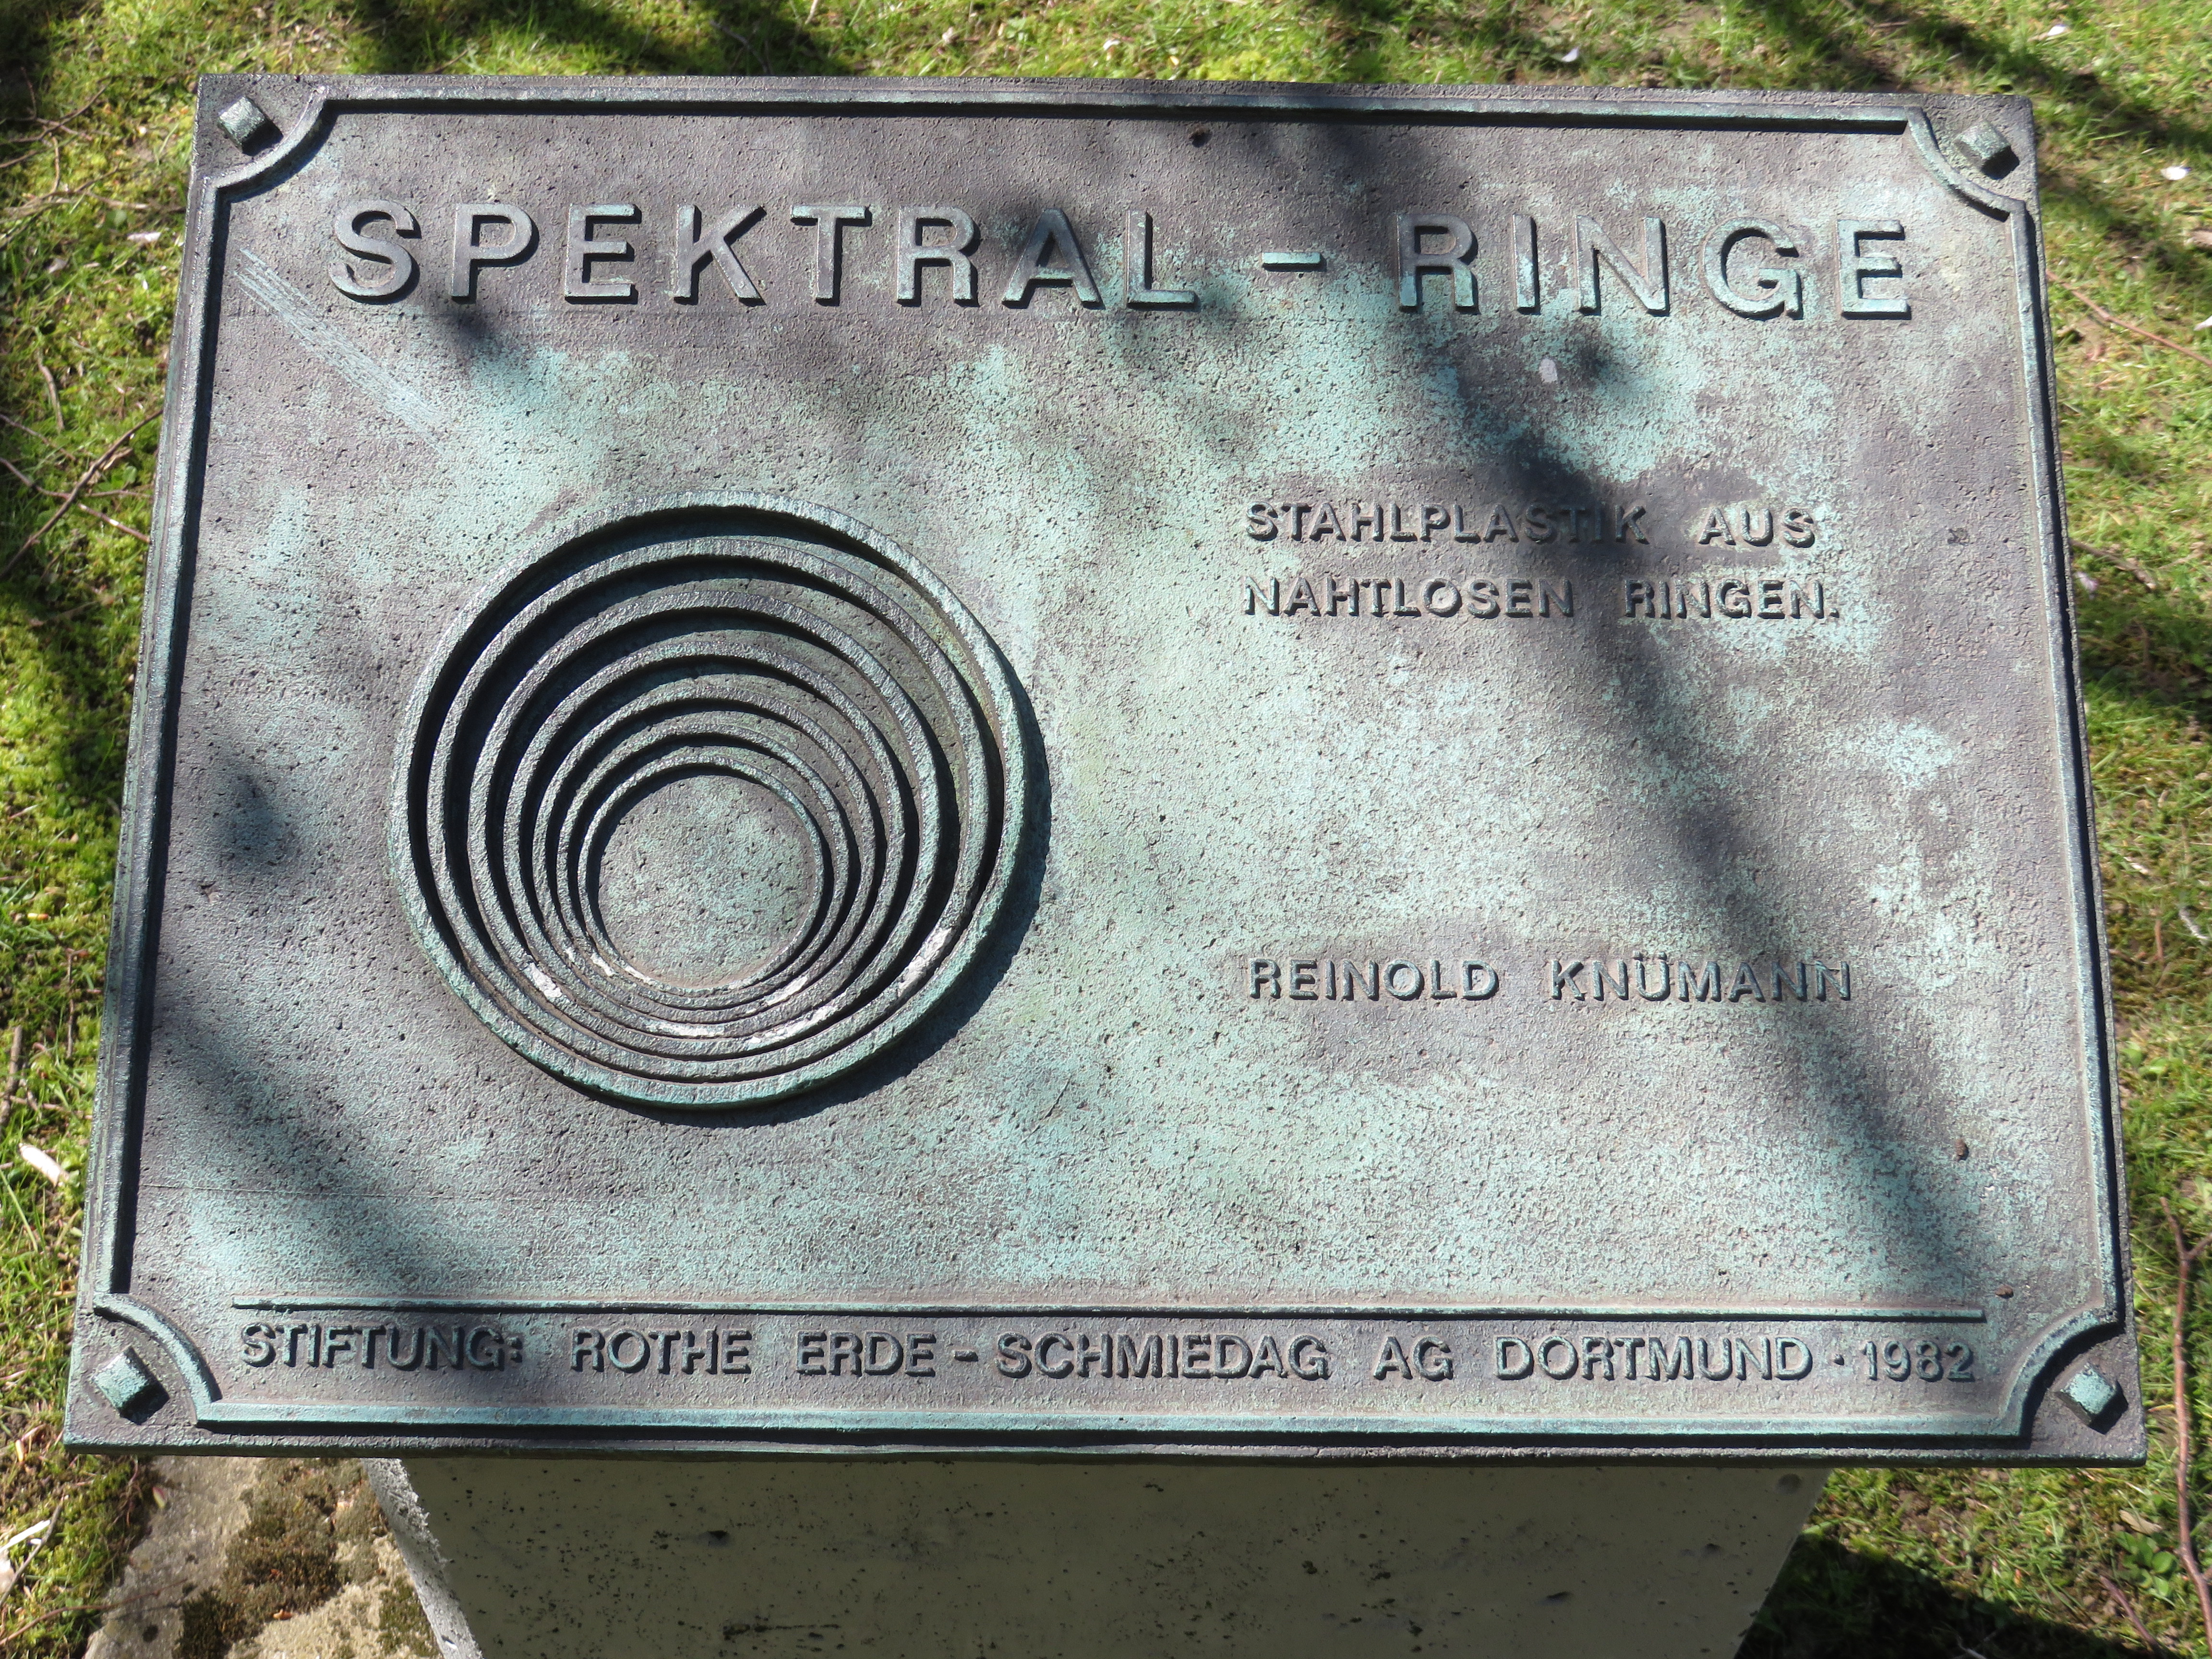 Spektral-Ringe - Info